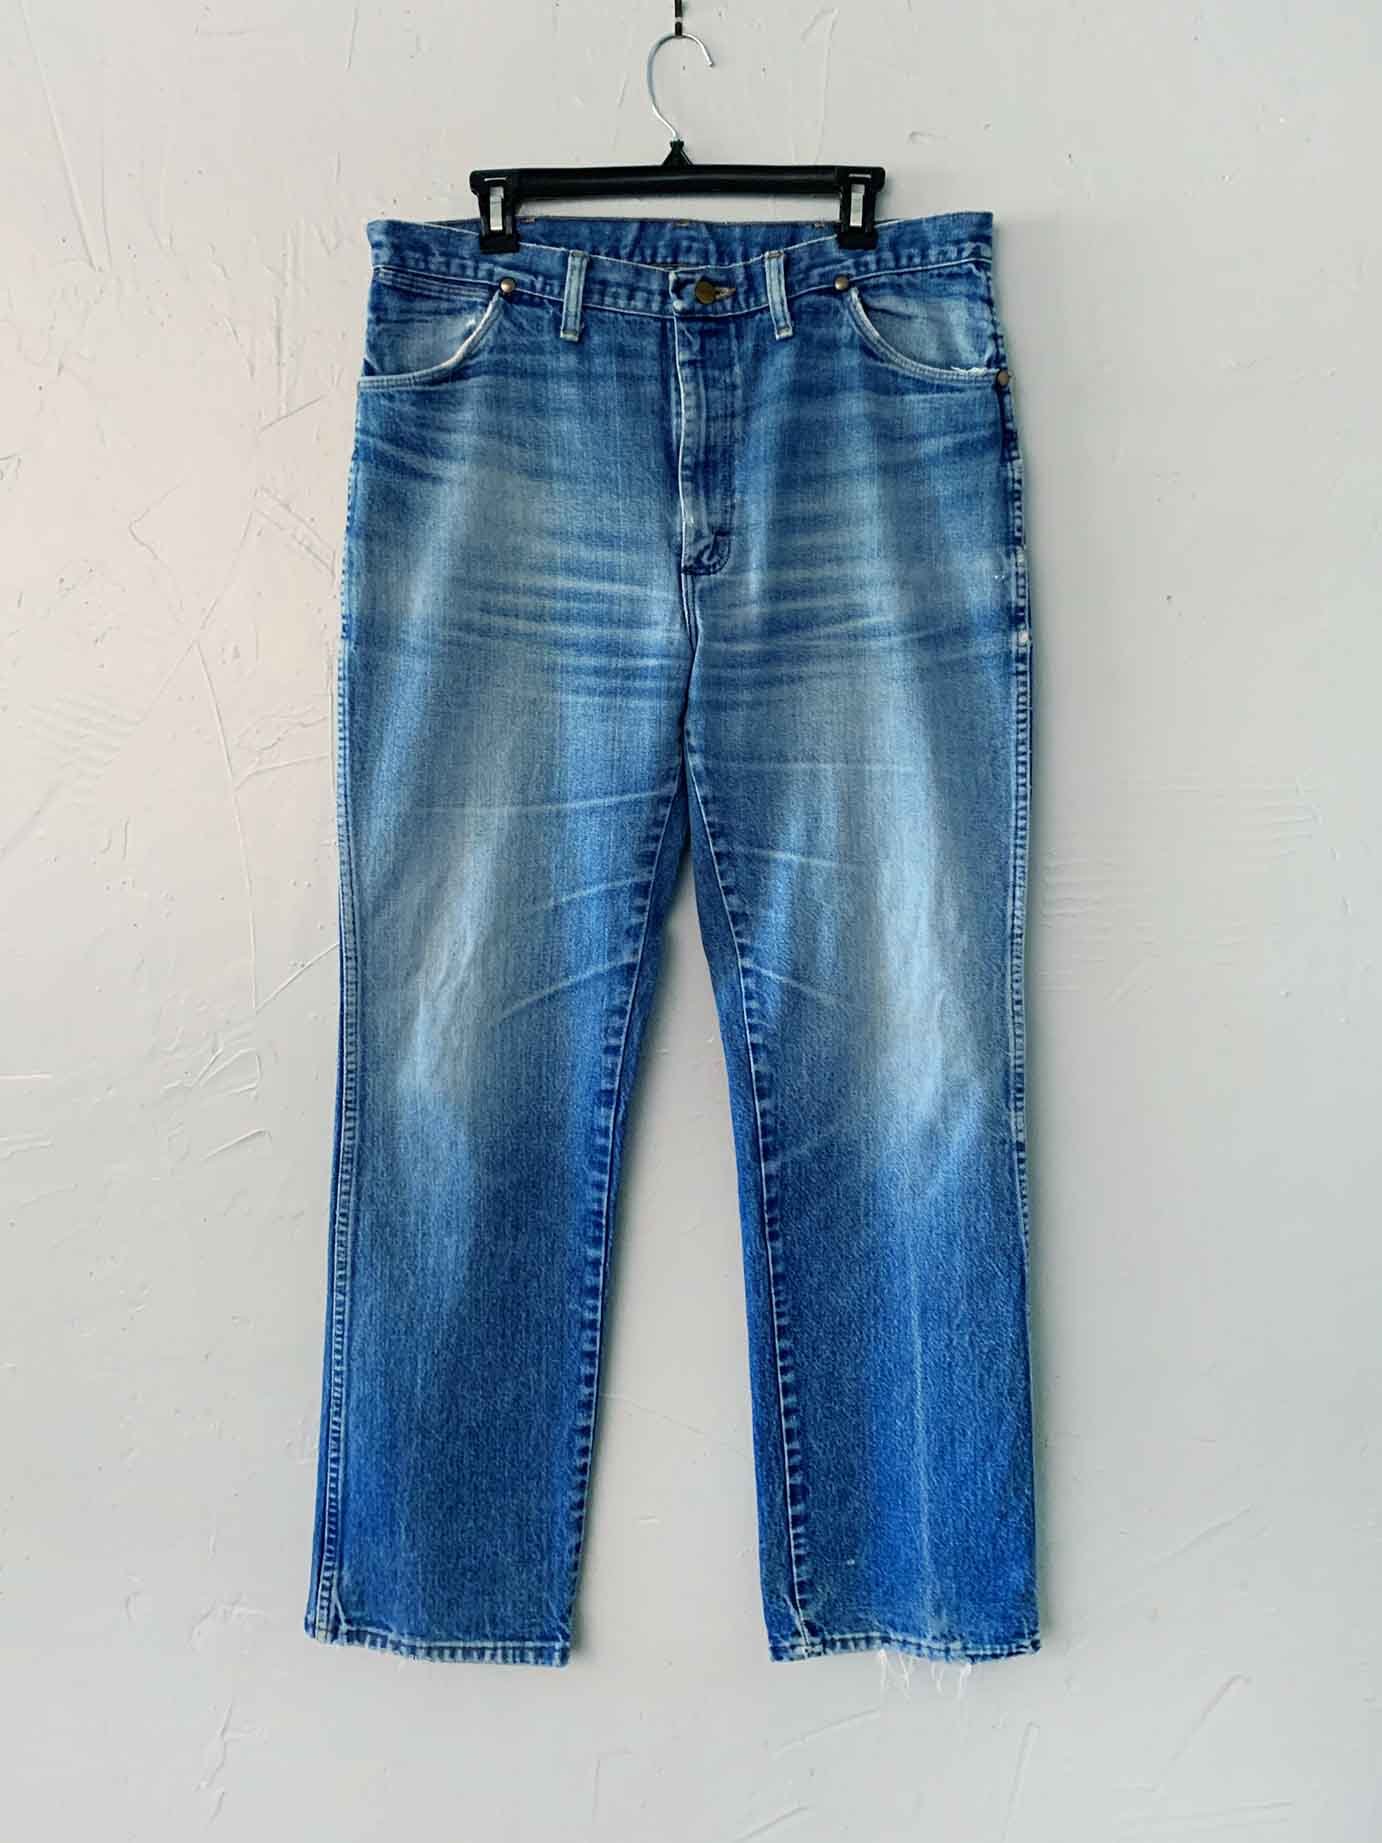 NISH | Wrangler Jeans - Made in USA - 38x33